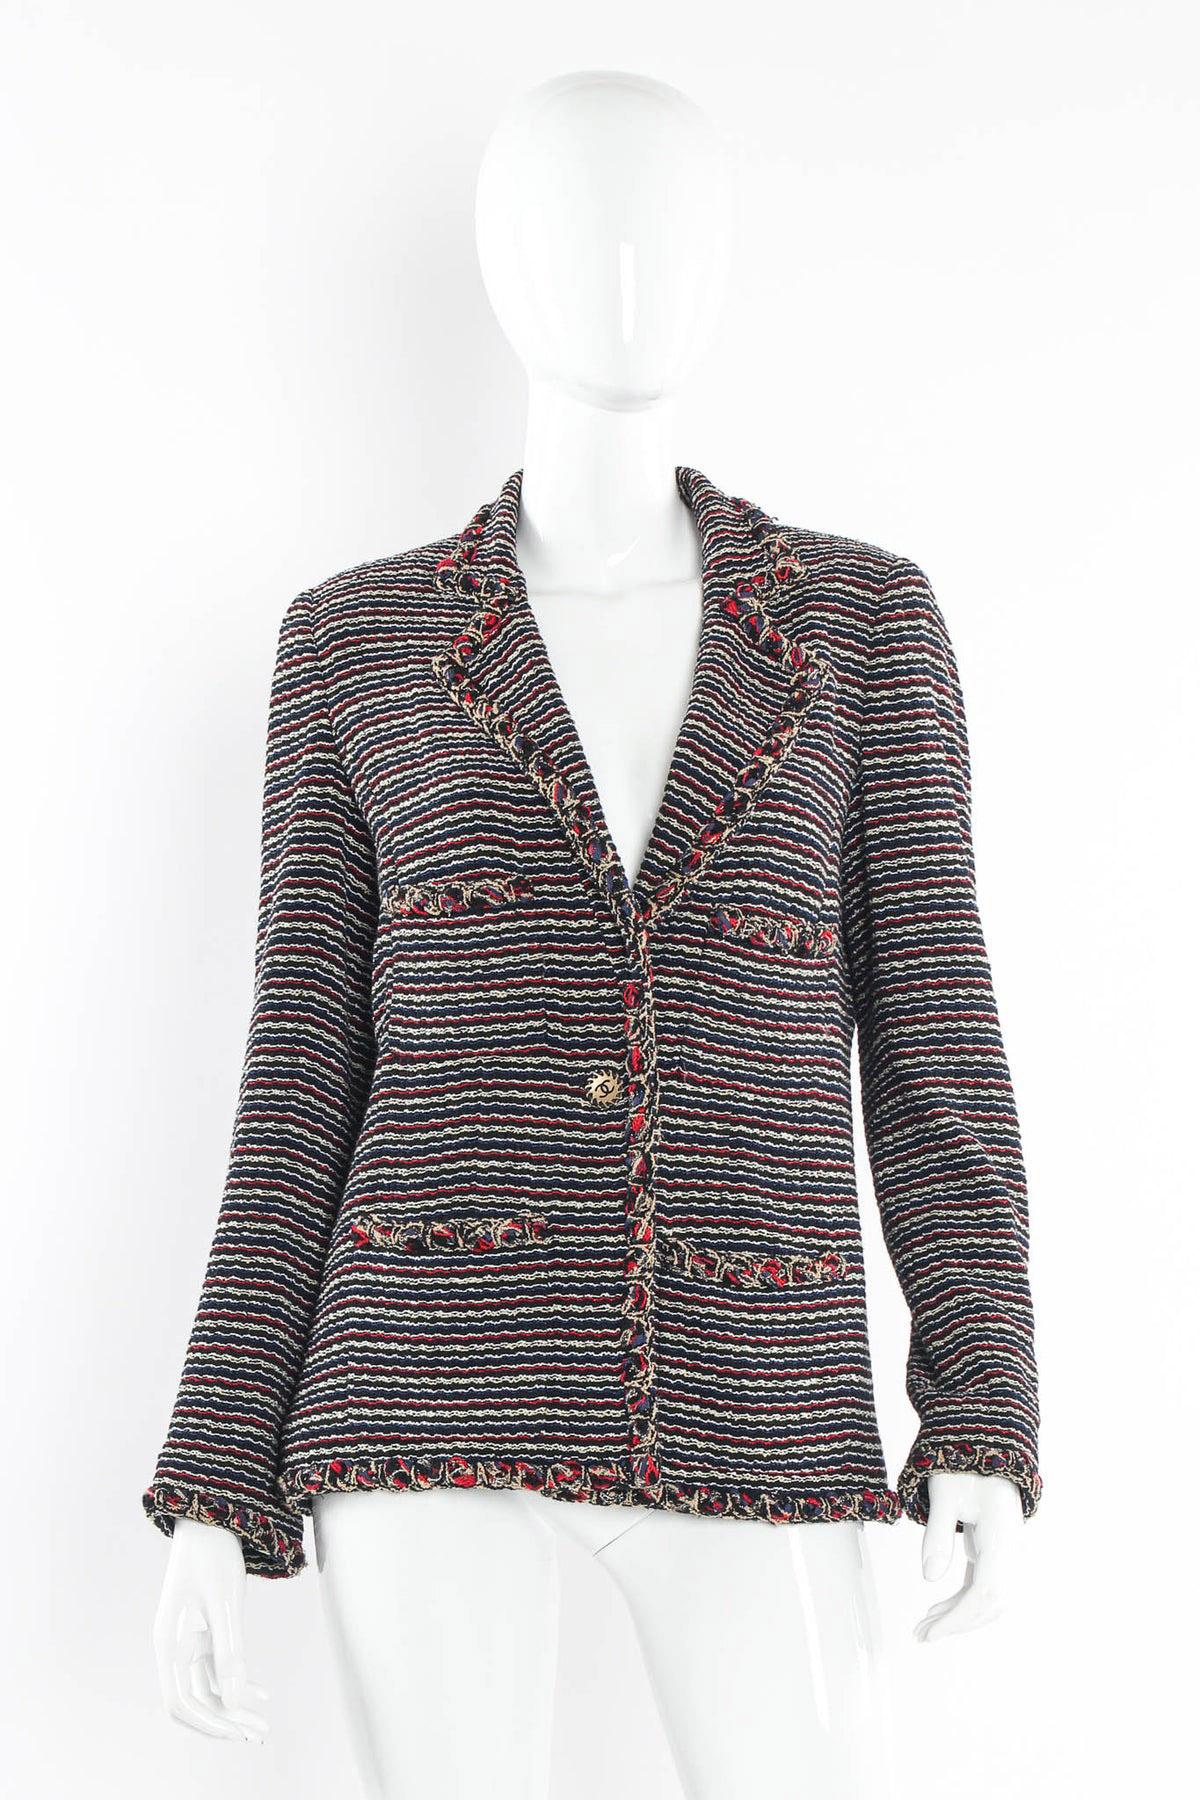 Chanel Runway Saint-Tropez Lesage Tweed Jacket For Sale 1